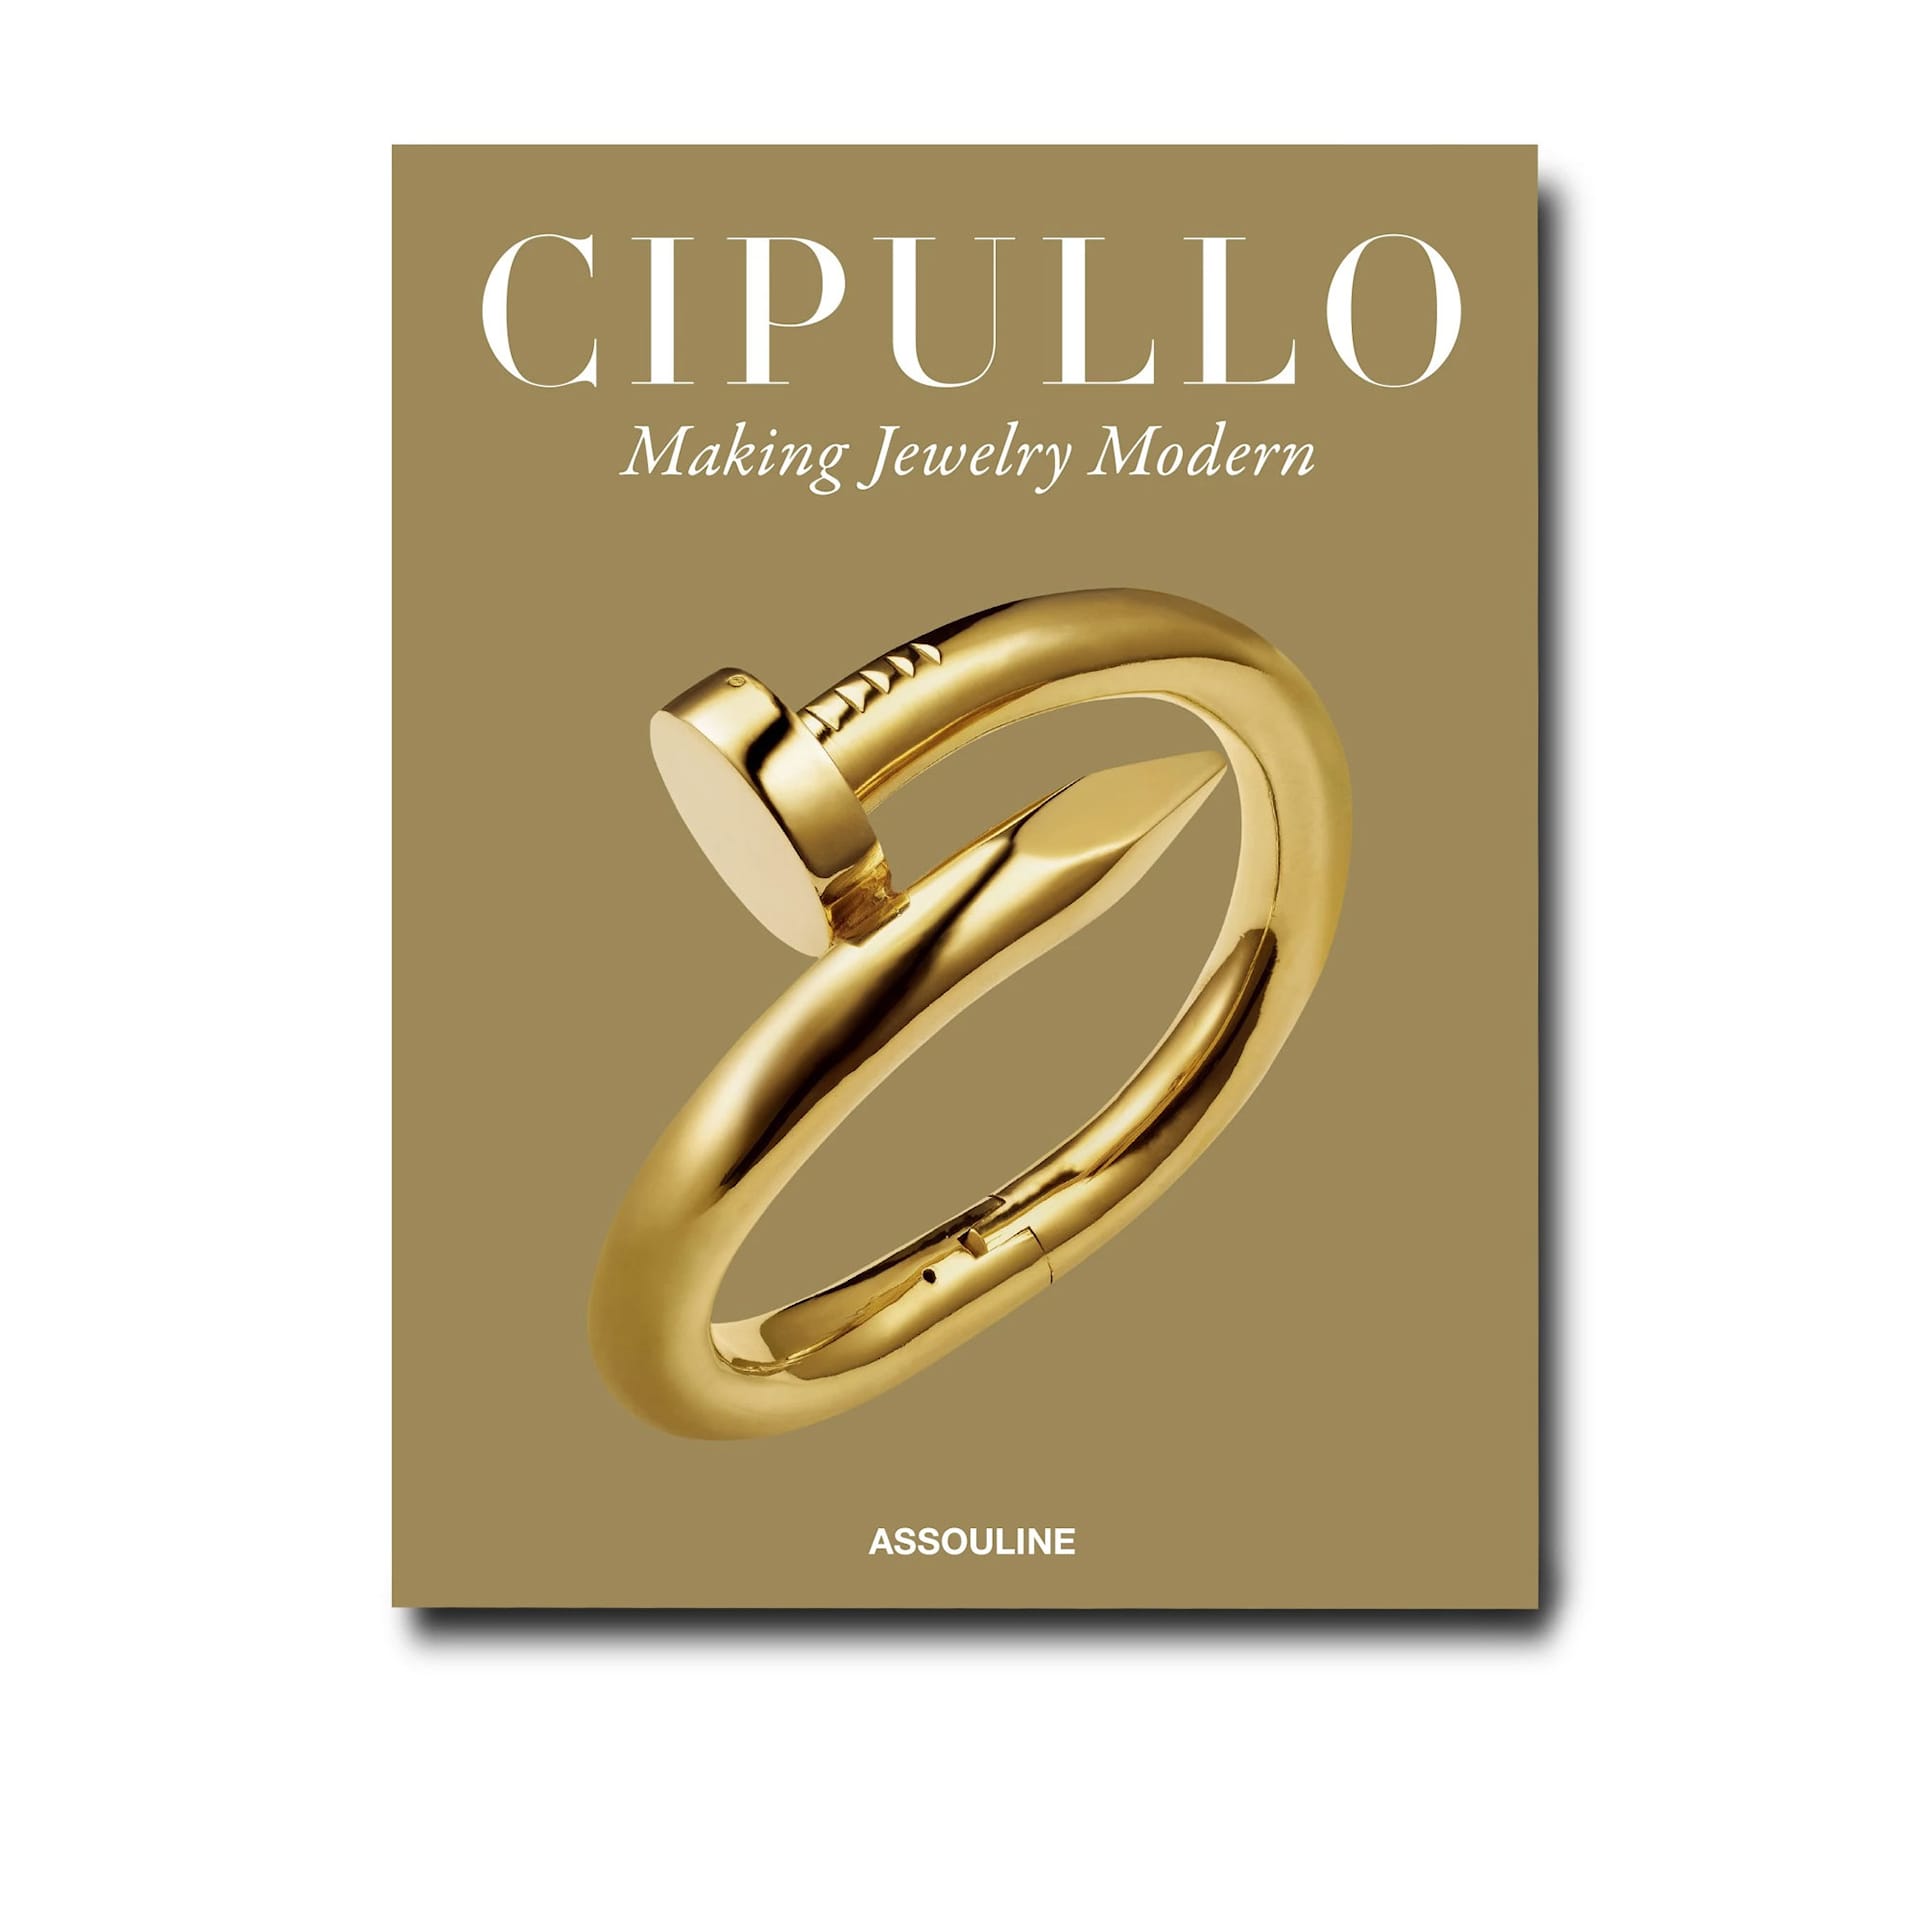 Cipullo: Making Jewelry Modern - New Mags - NO GA